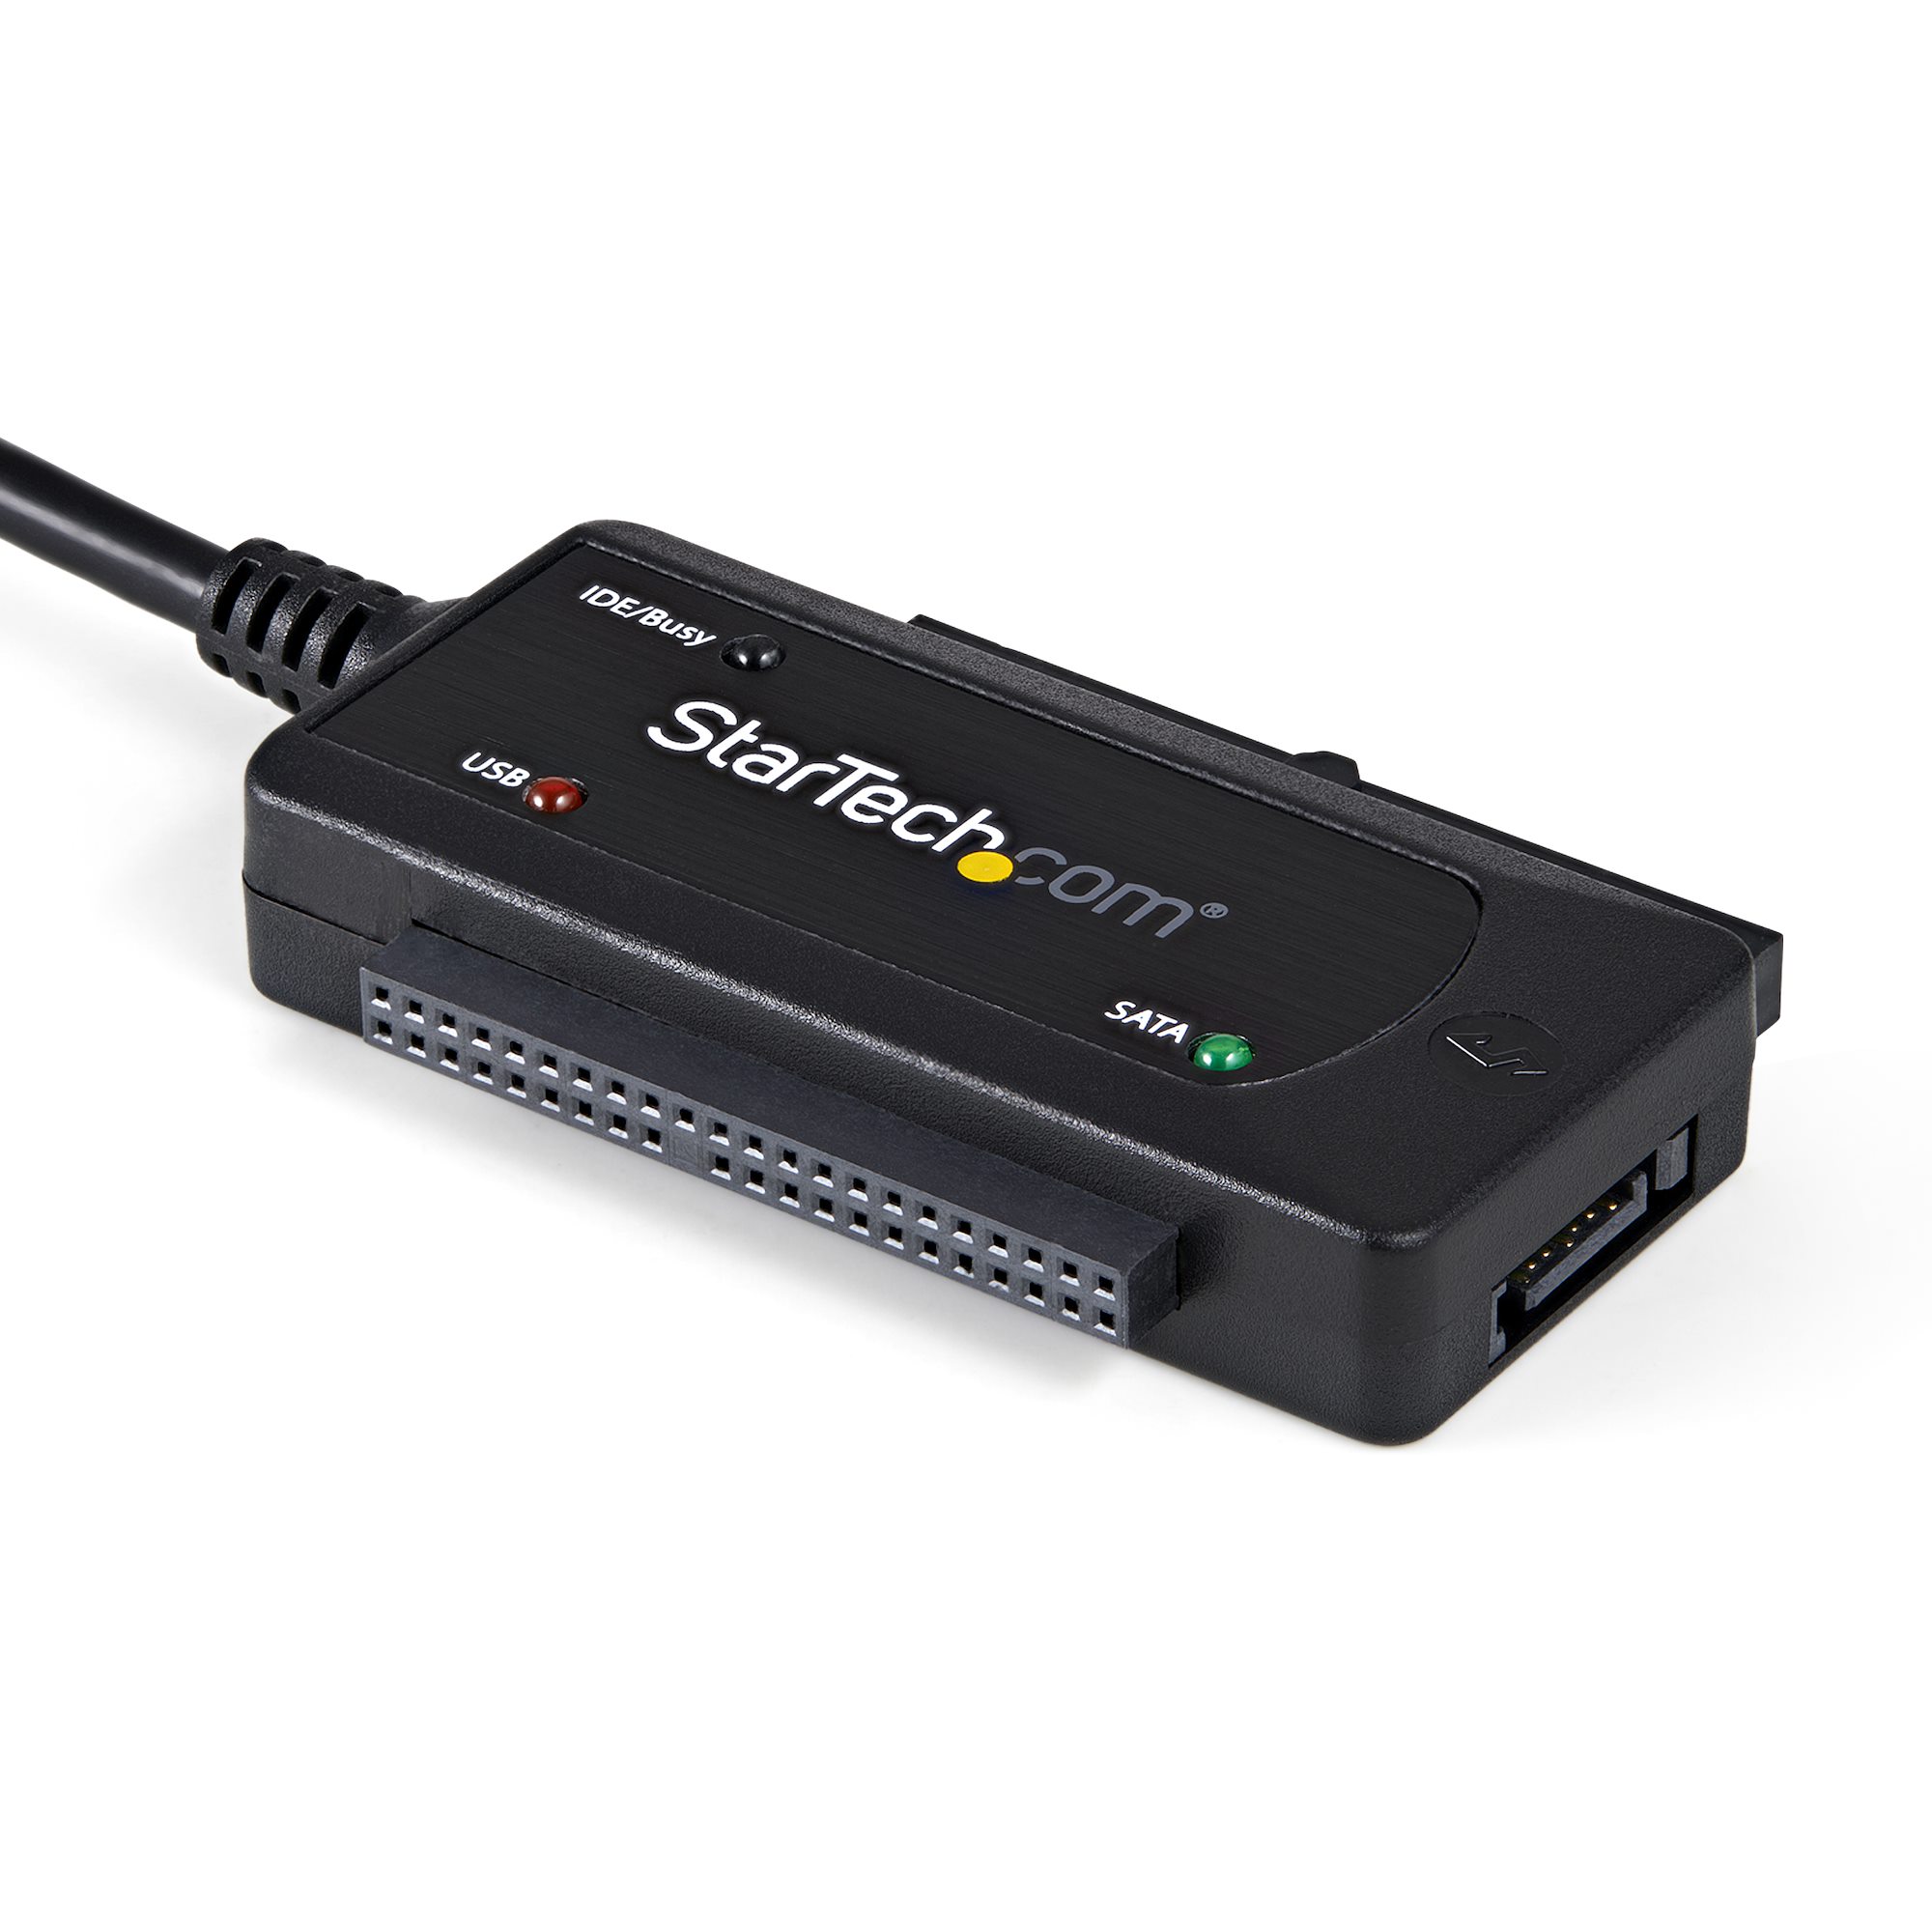 USB 2.0 to SATA IDE Adapter Adaptadores de unidad de disco y conversores de unidad de disco | StarTech.com